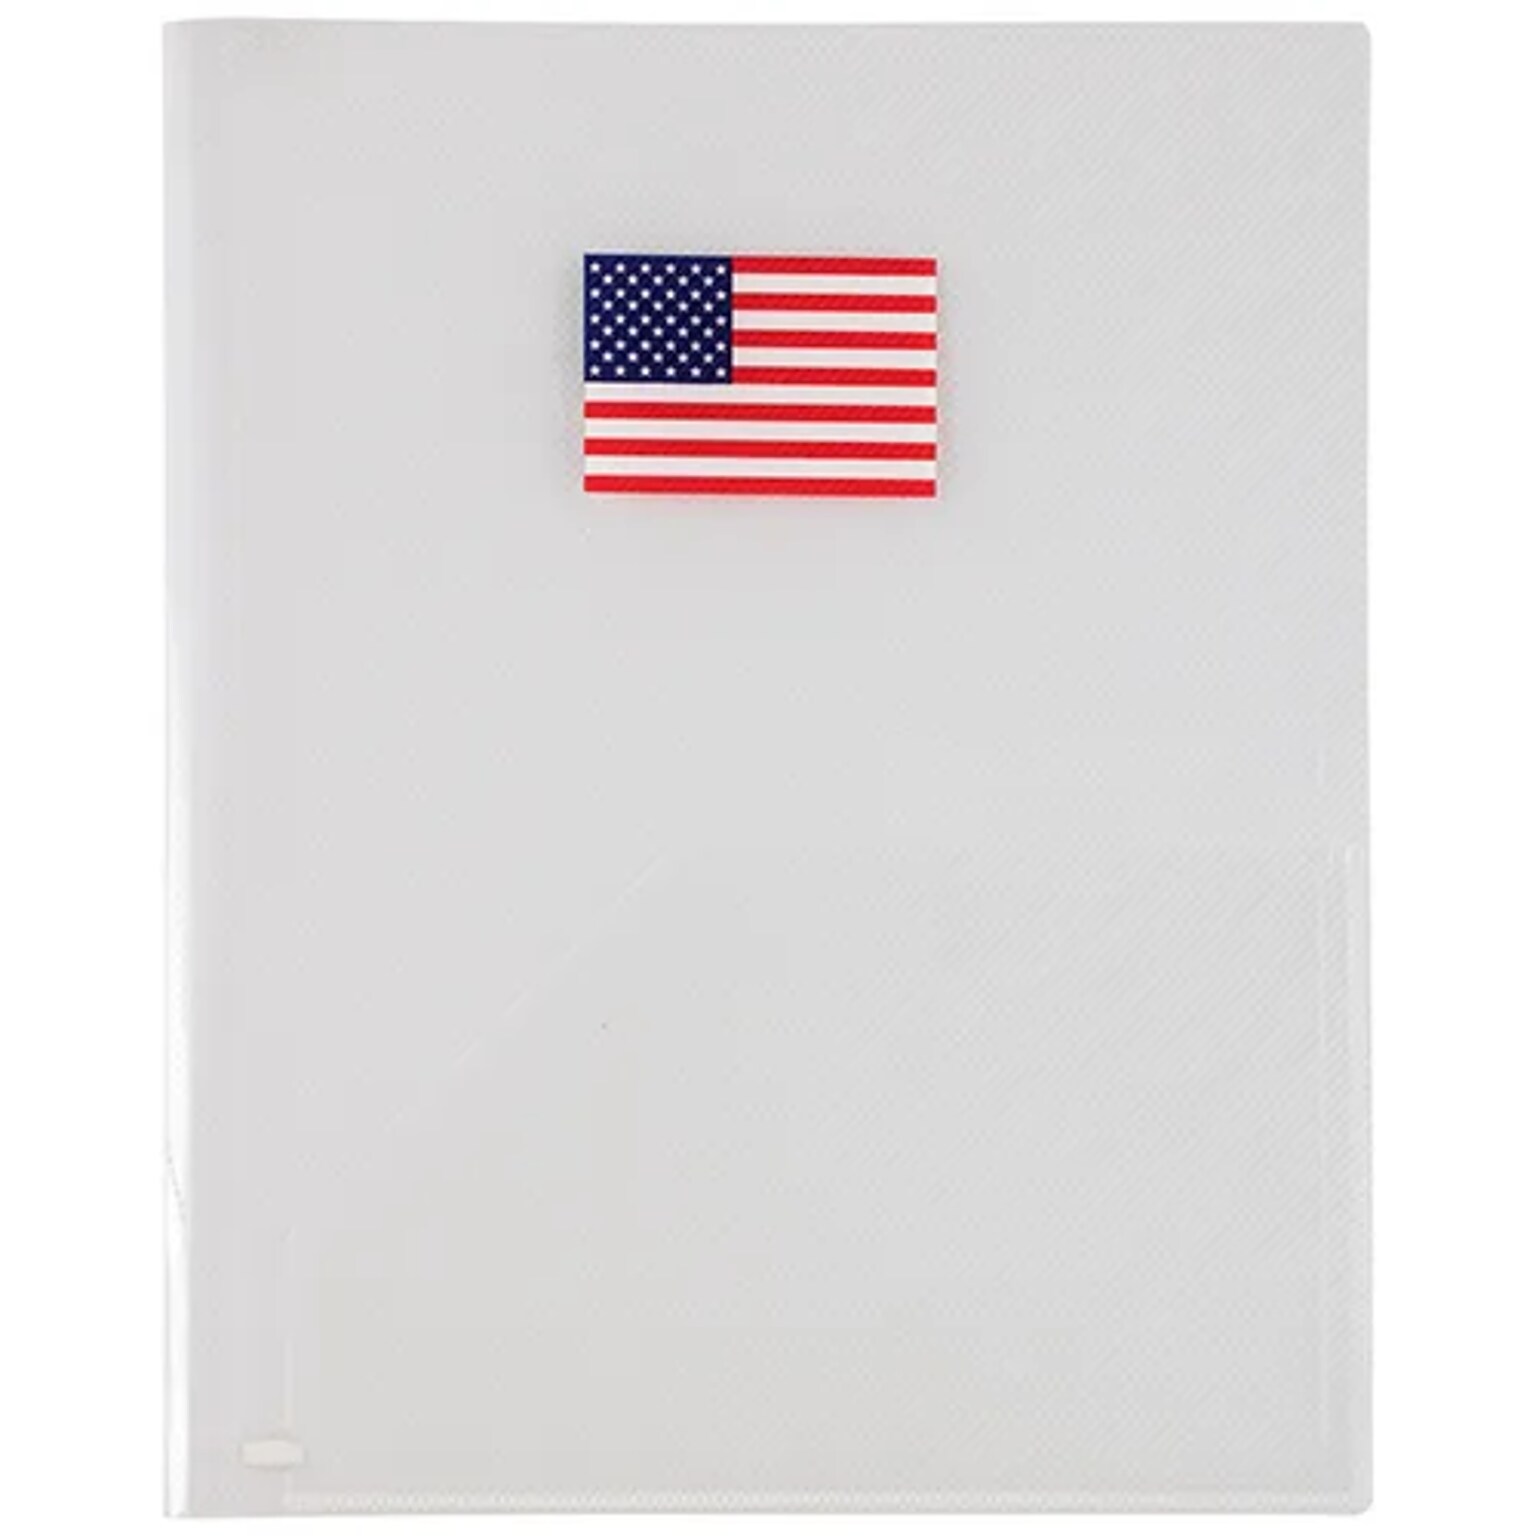 JAM Paper 2-Pocket Plastic Presentation Folders, 8 x 11.5 Clear w/ American Flag, 12/Pack (9439026A)